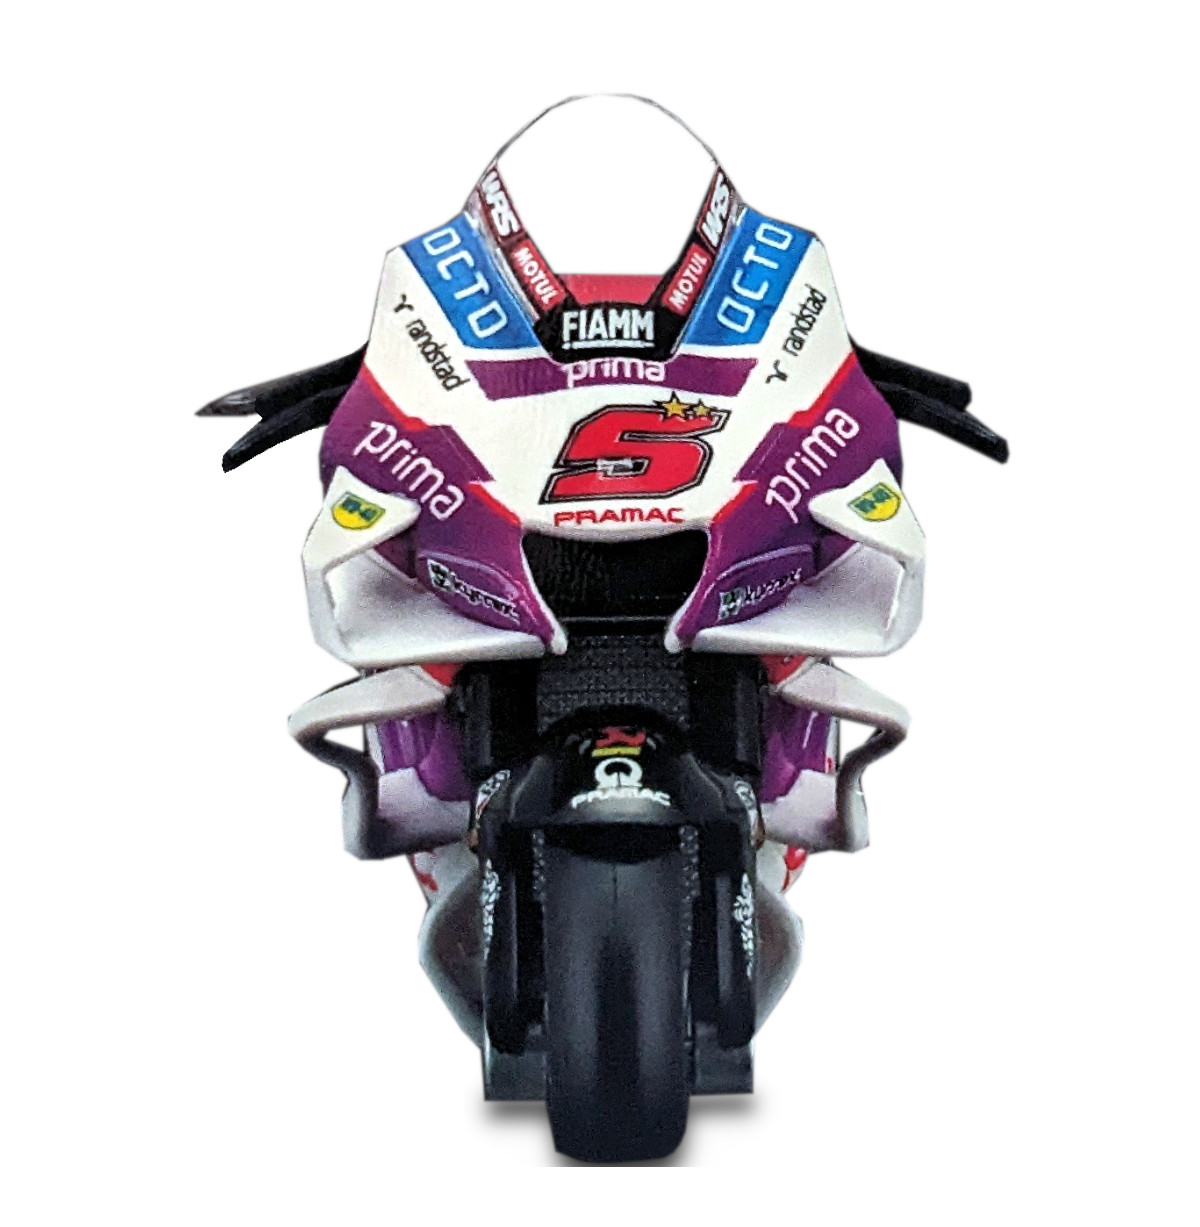 MAISTO Modellmotorrad MotoGP Ducati Pramac 1:18) Spielzeugmotorrad Johann (Maßstab \'22 #5 Zarco